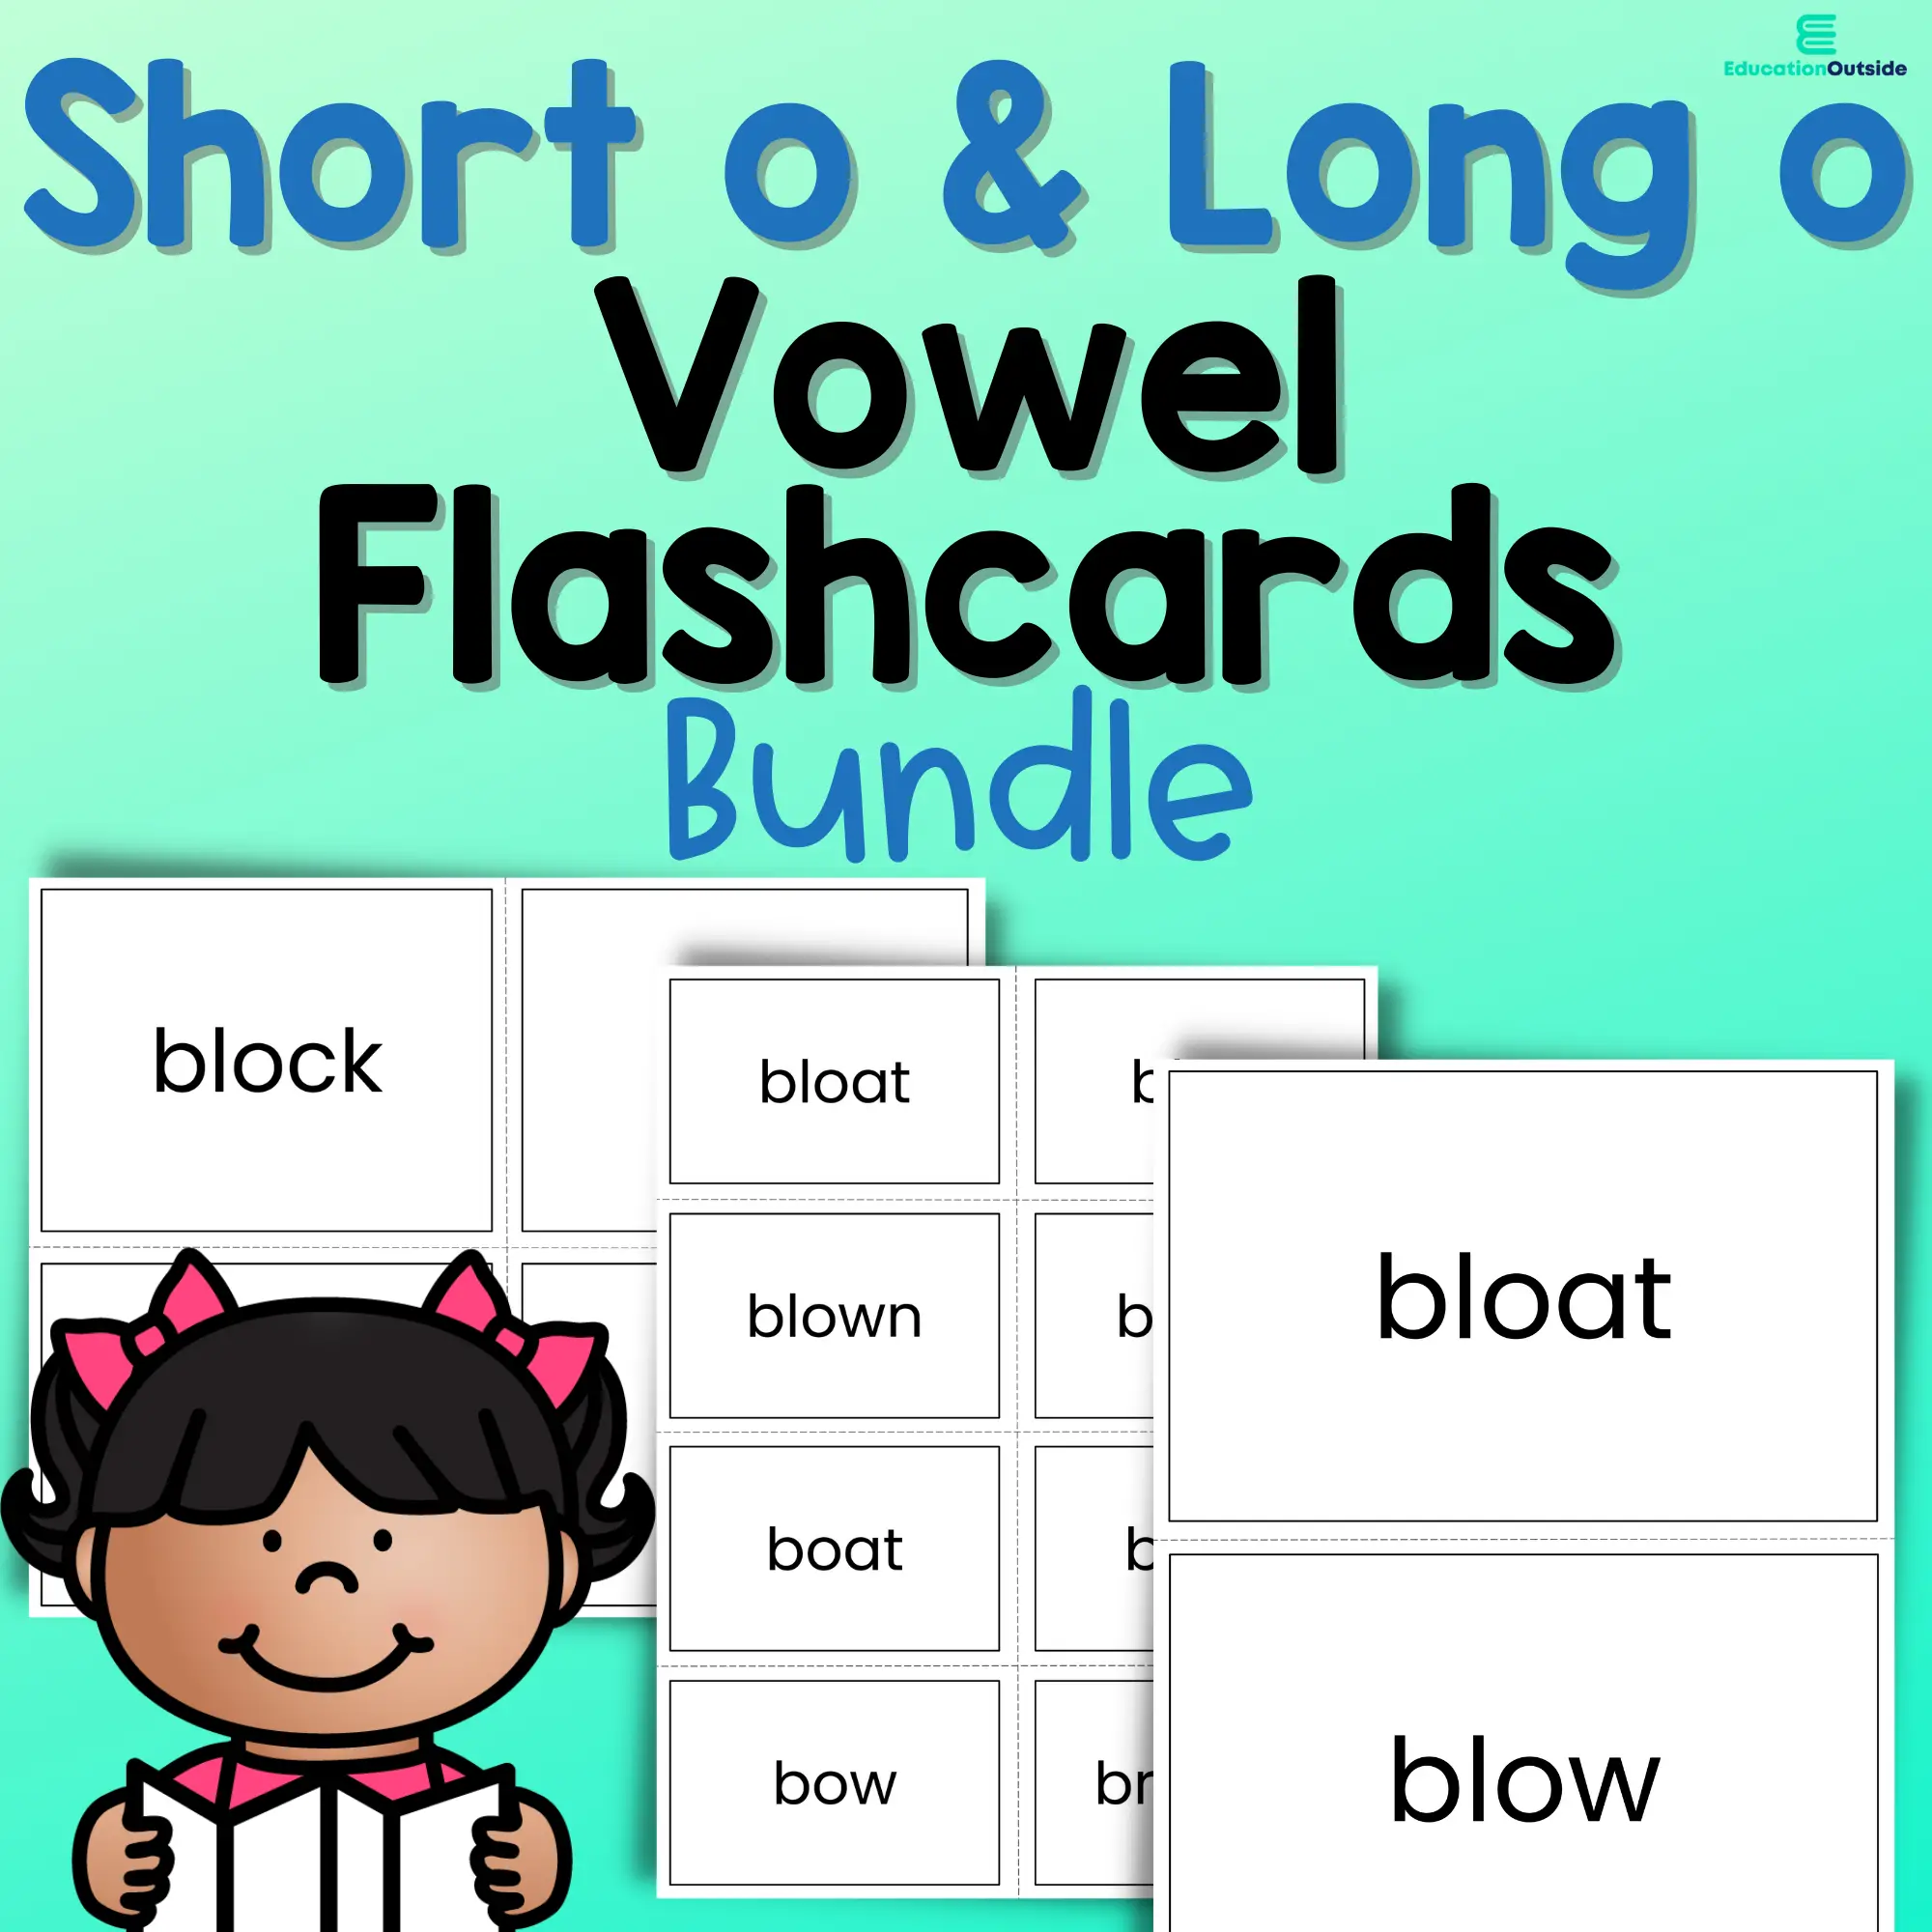 Short o long o vowel flashcard packet